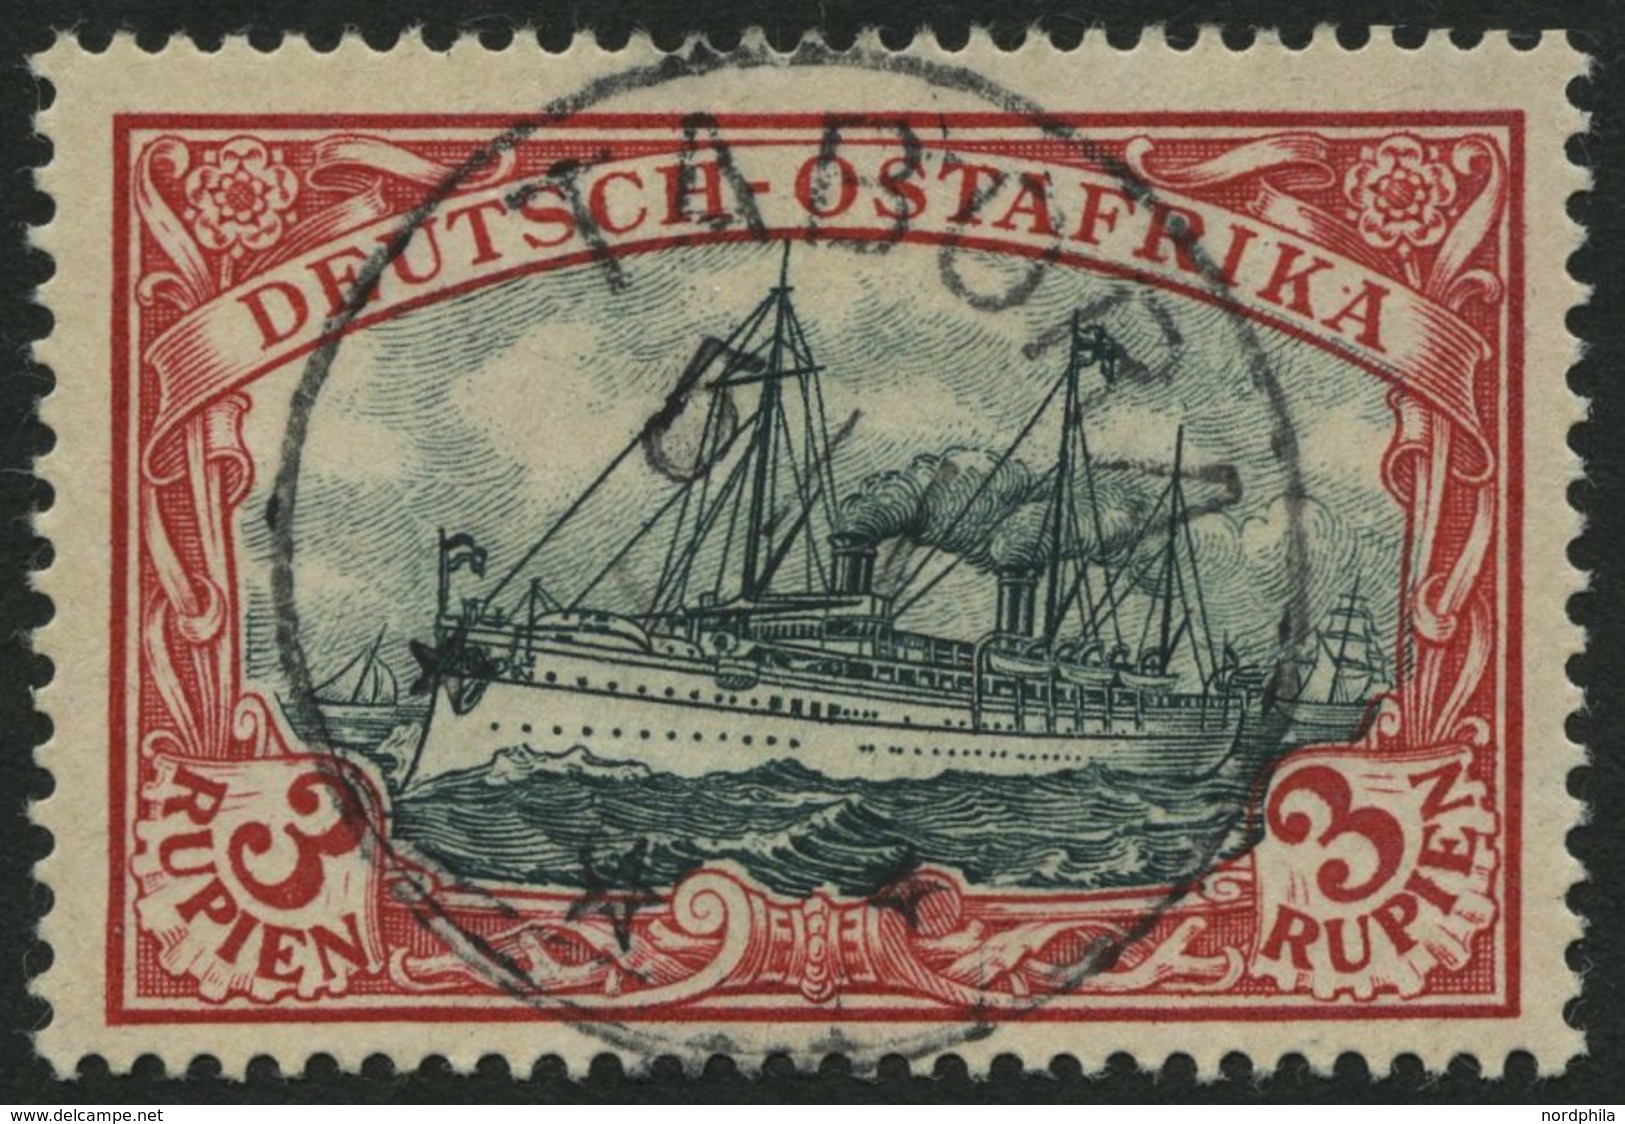 DEUTSCH-OSTAFRIKA 21b O, 1901, 3 R. Dunkelrot/grünschwarz, Ohne Wz., Stempel TABORA (ohne Jahreszahl), Pracht - Duits-Oost-Afrika